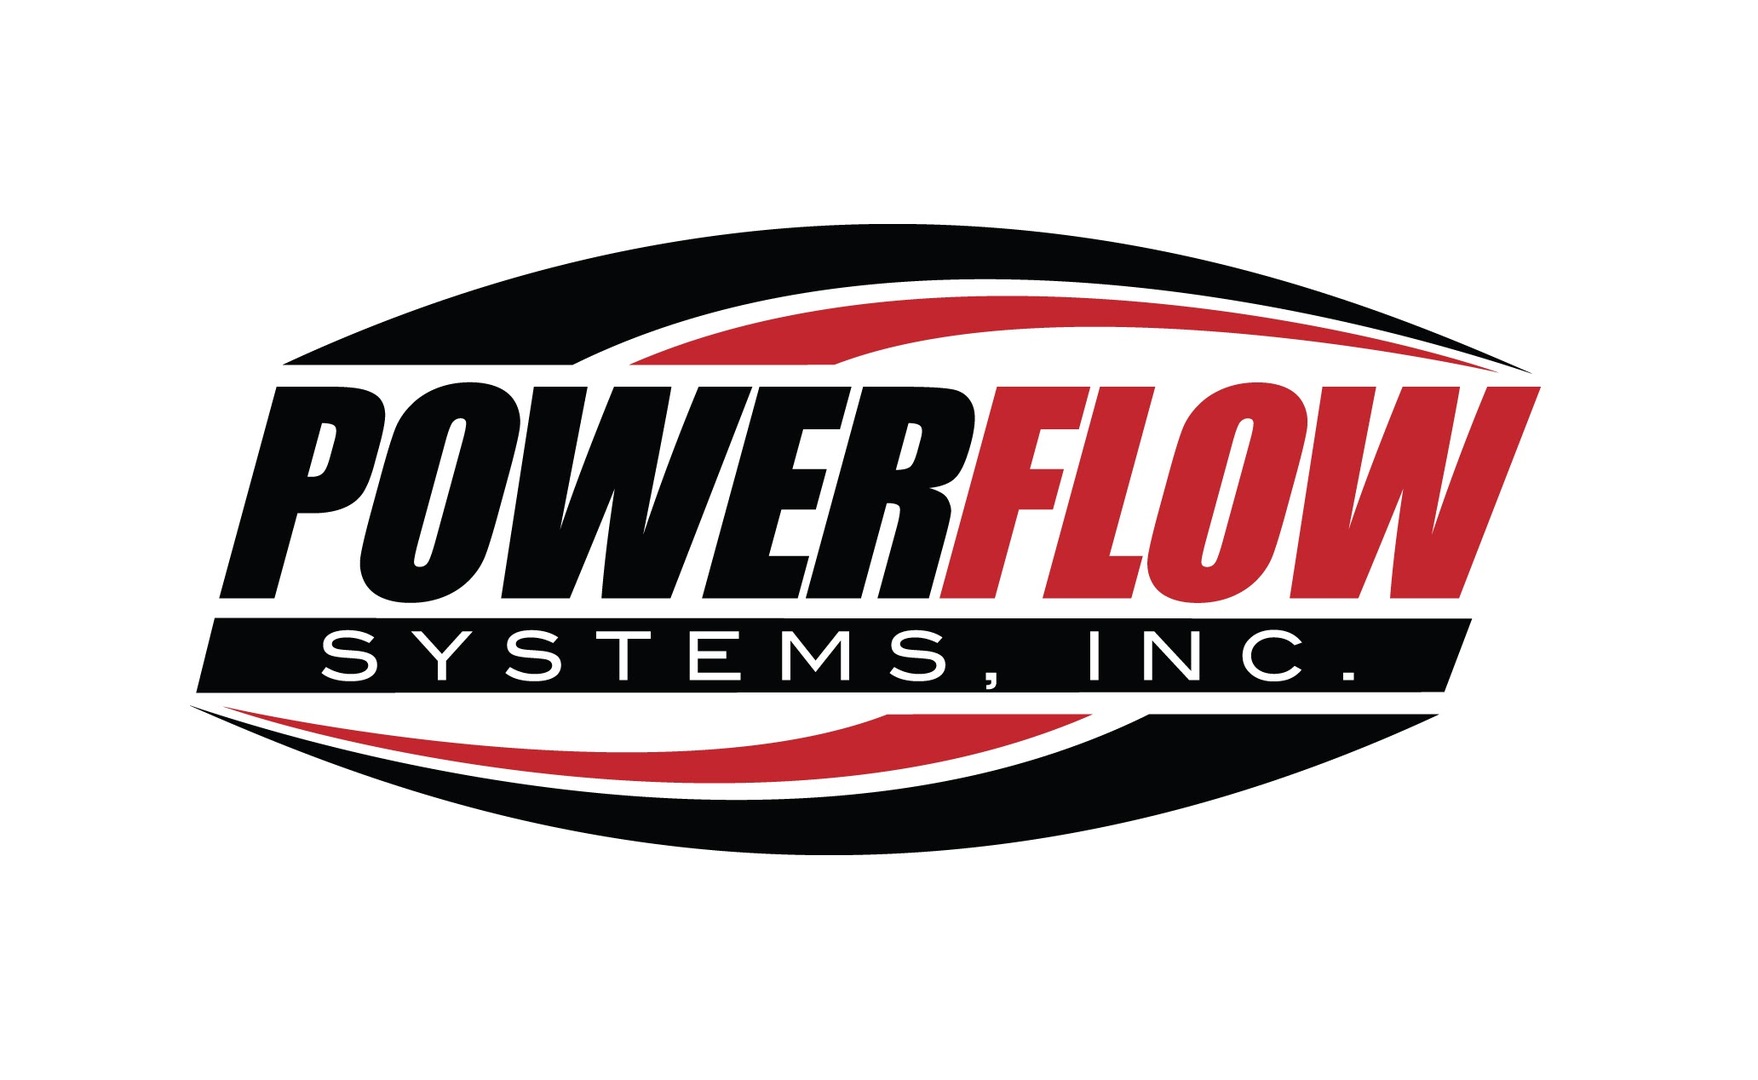 PowerFlow Systems